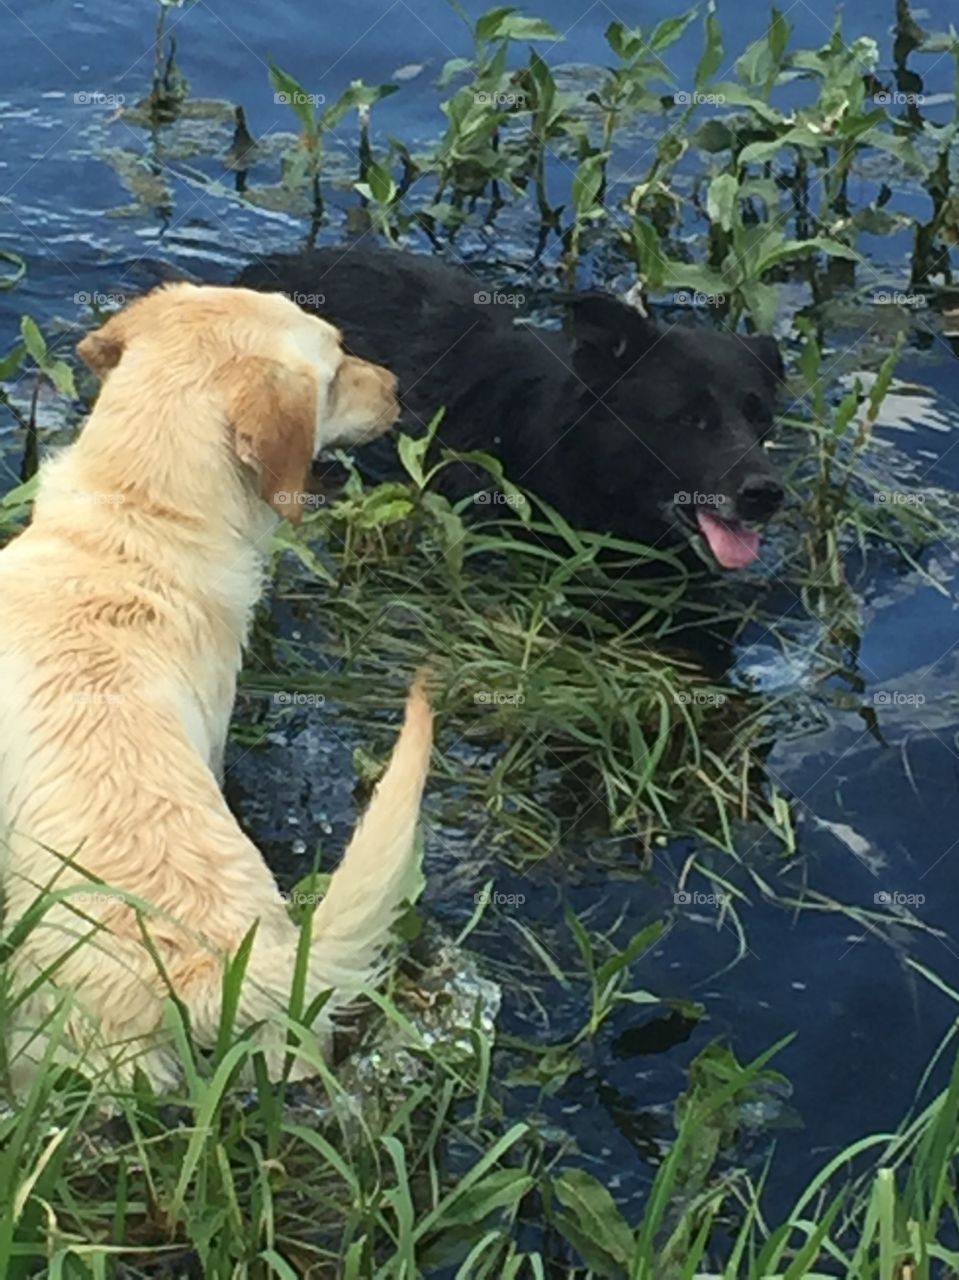 Swimming partners